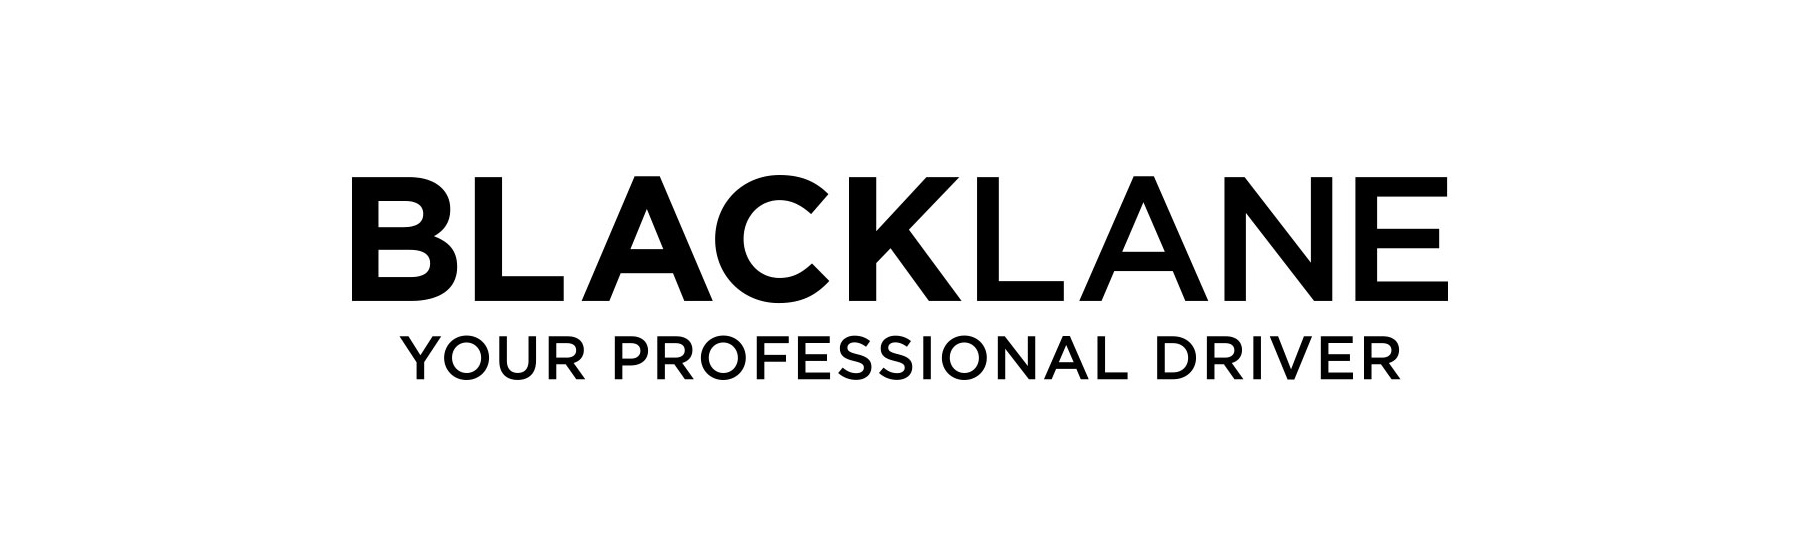 blacklane travel agent portal